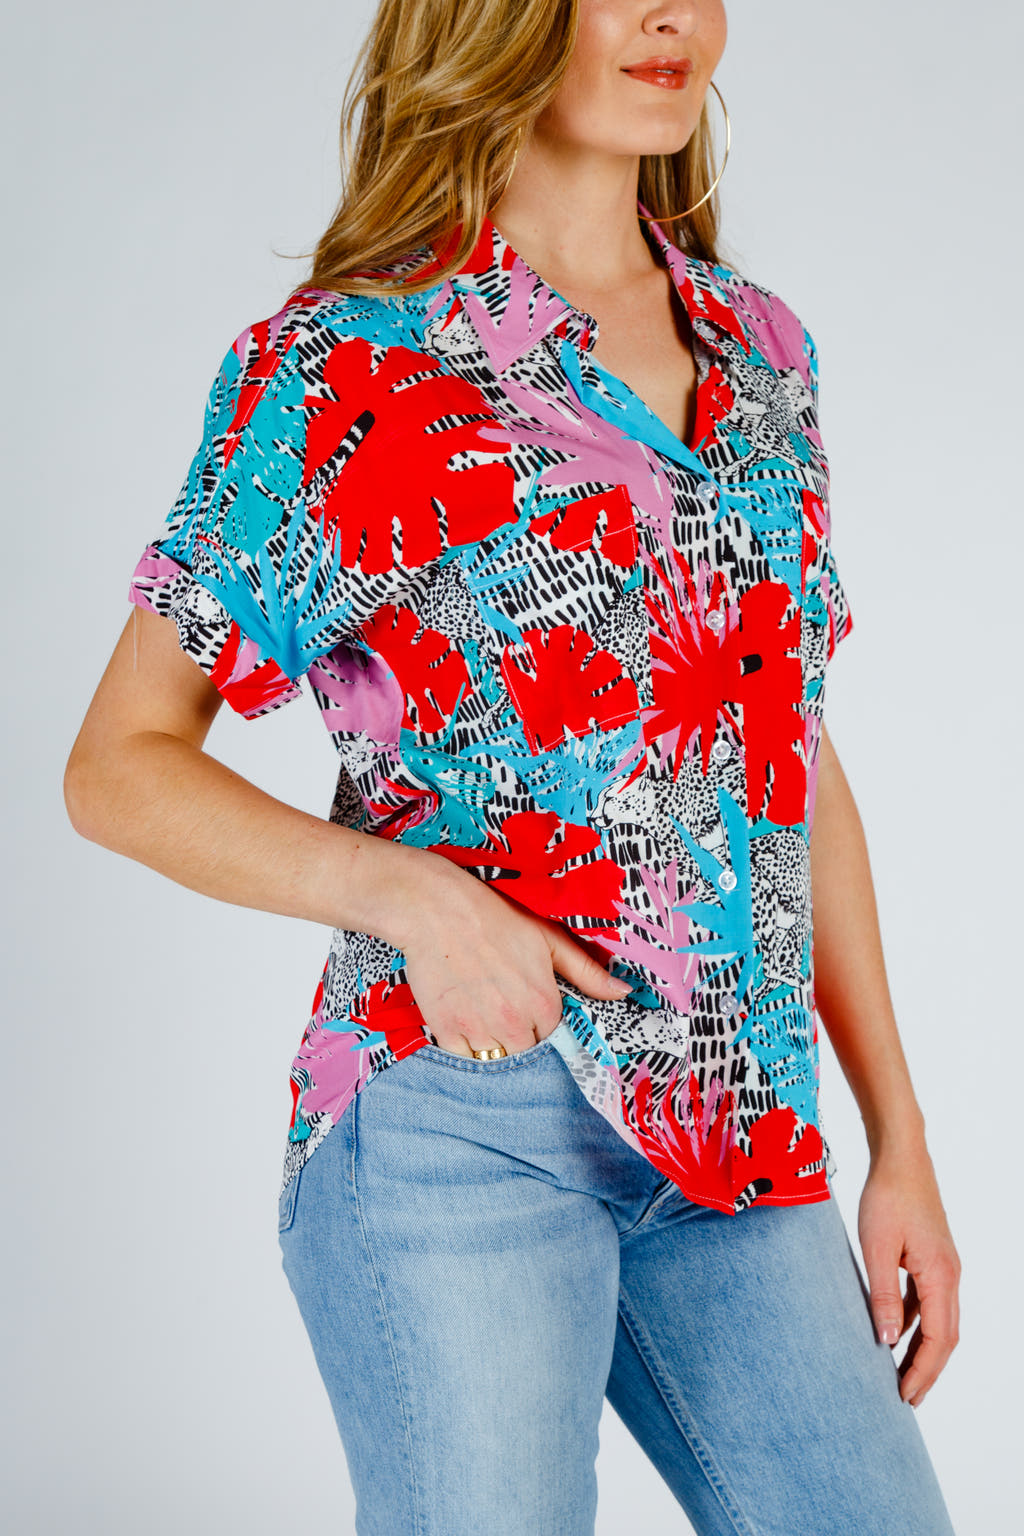 Women's bright patterned Hawaiian shirt